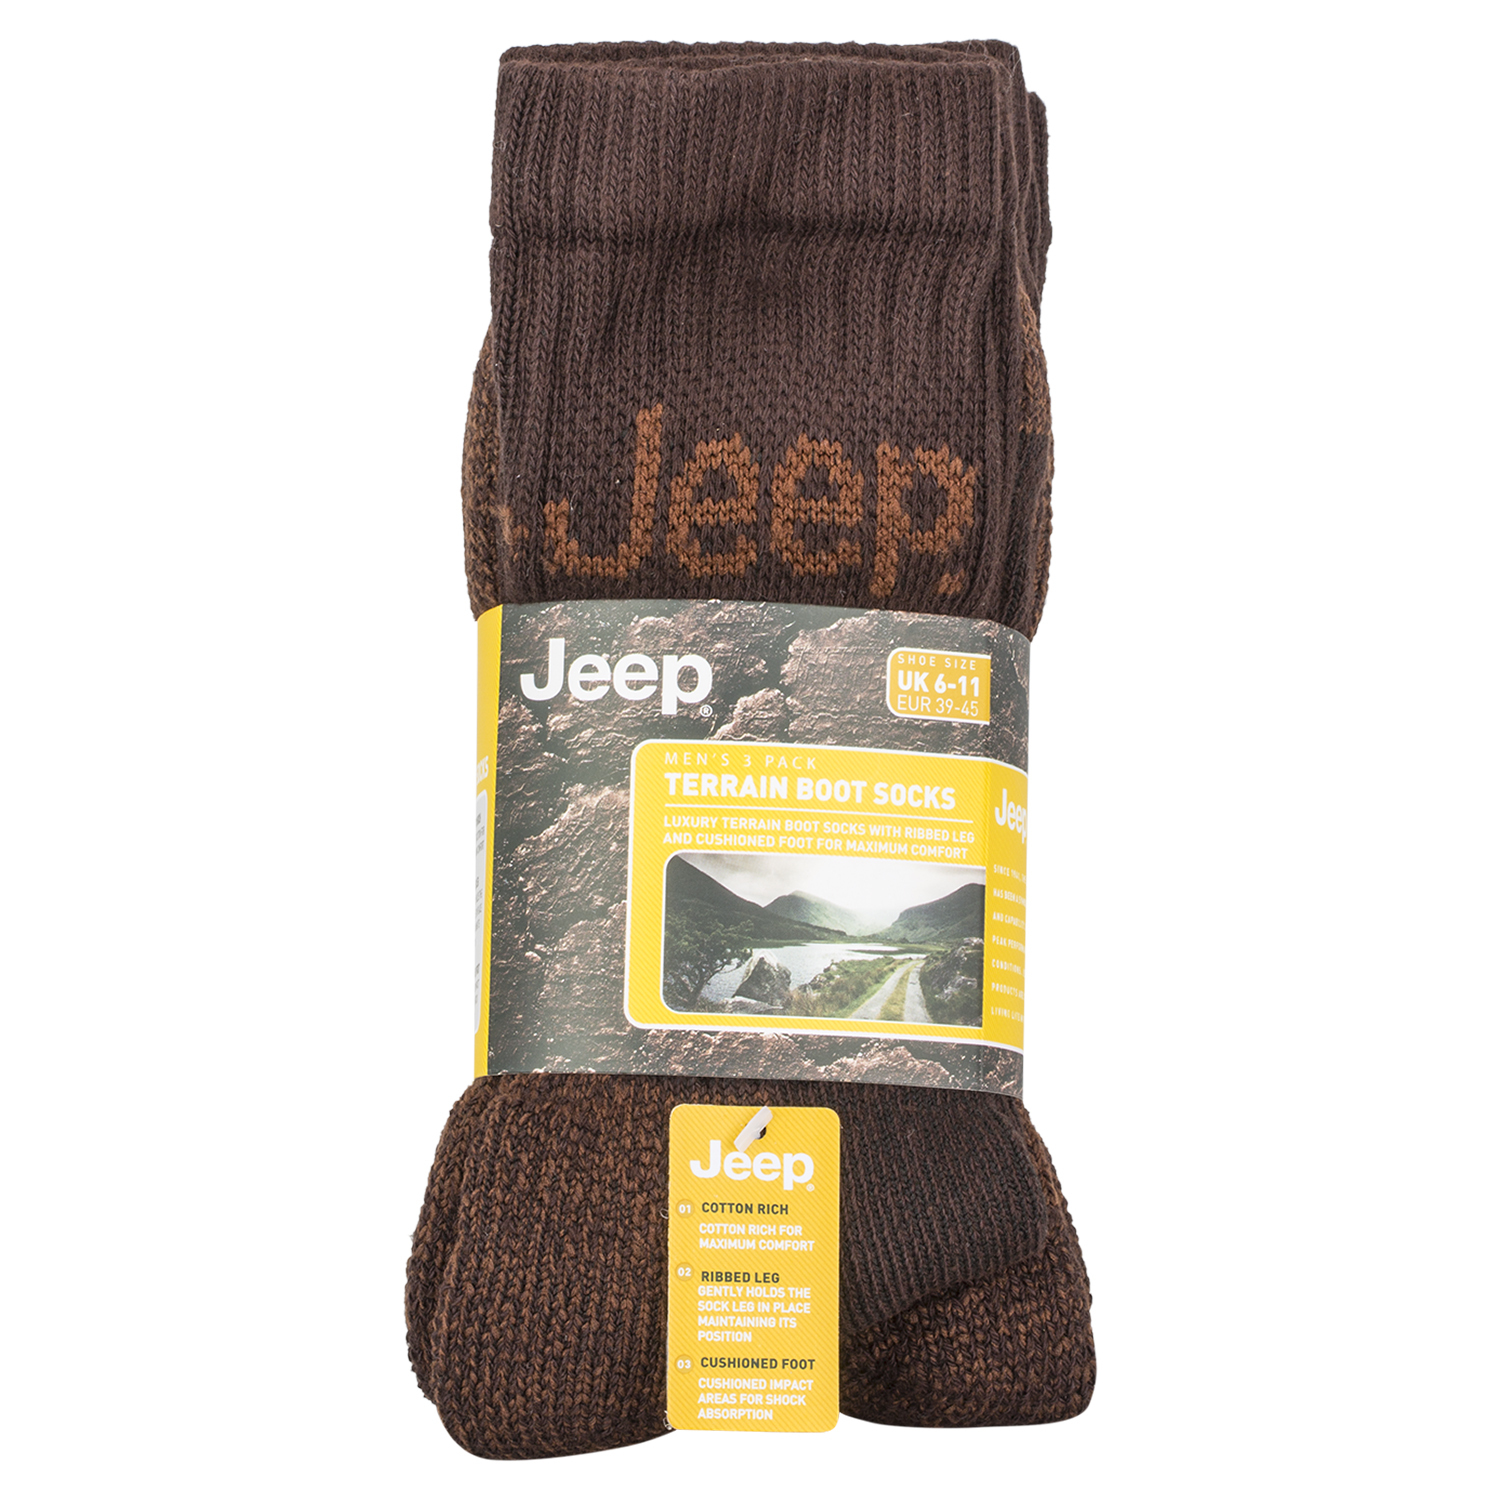 Single Jeep Terrain Mens Socks 3 Pack in Assorted styles Image 3